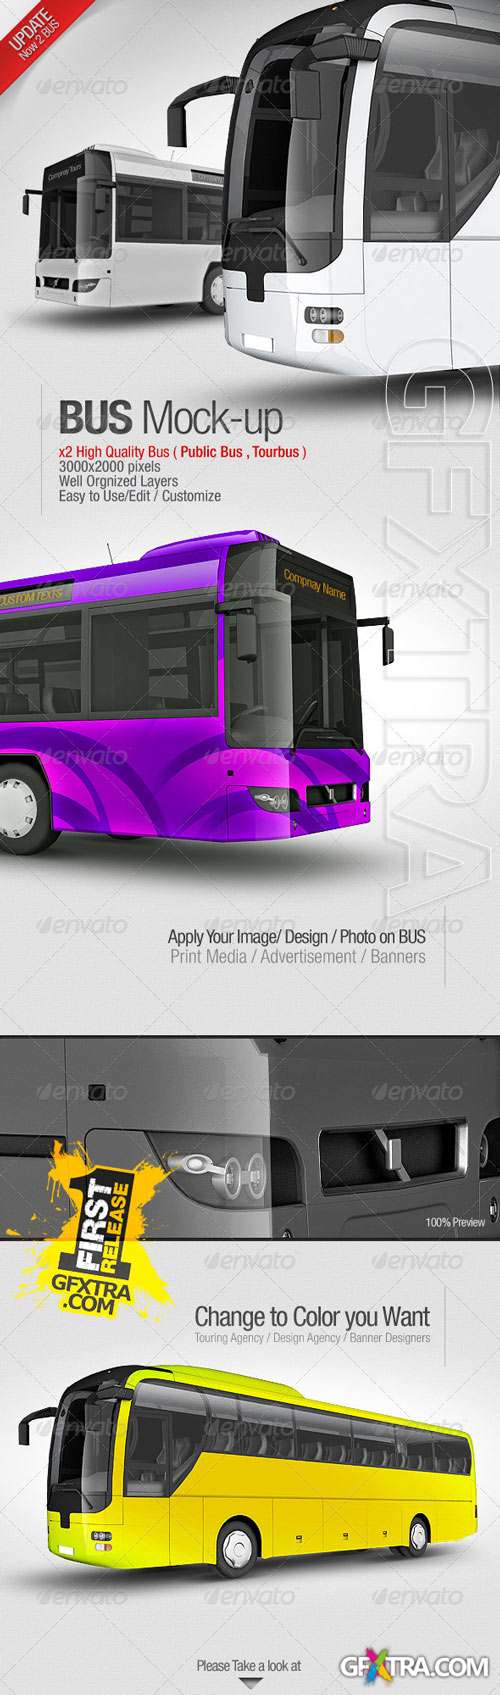 GraphicRiver: Bus Mockup Template